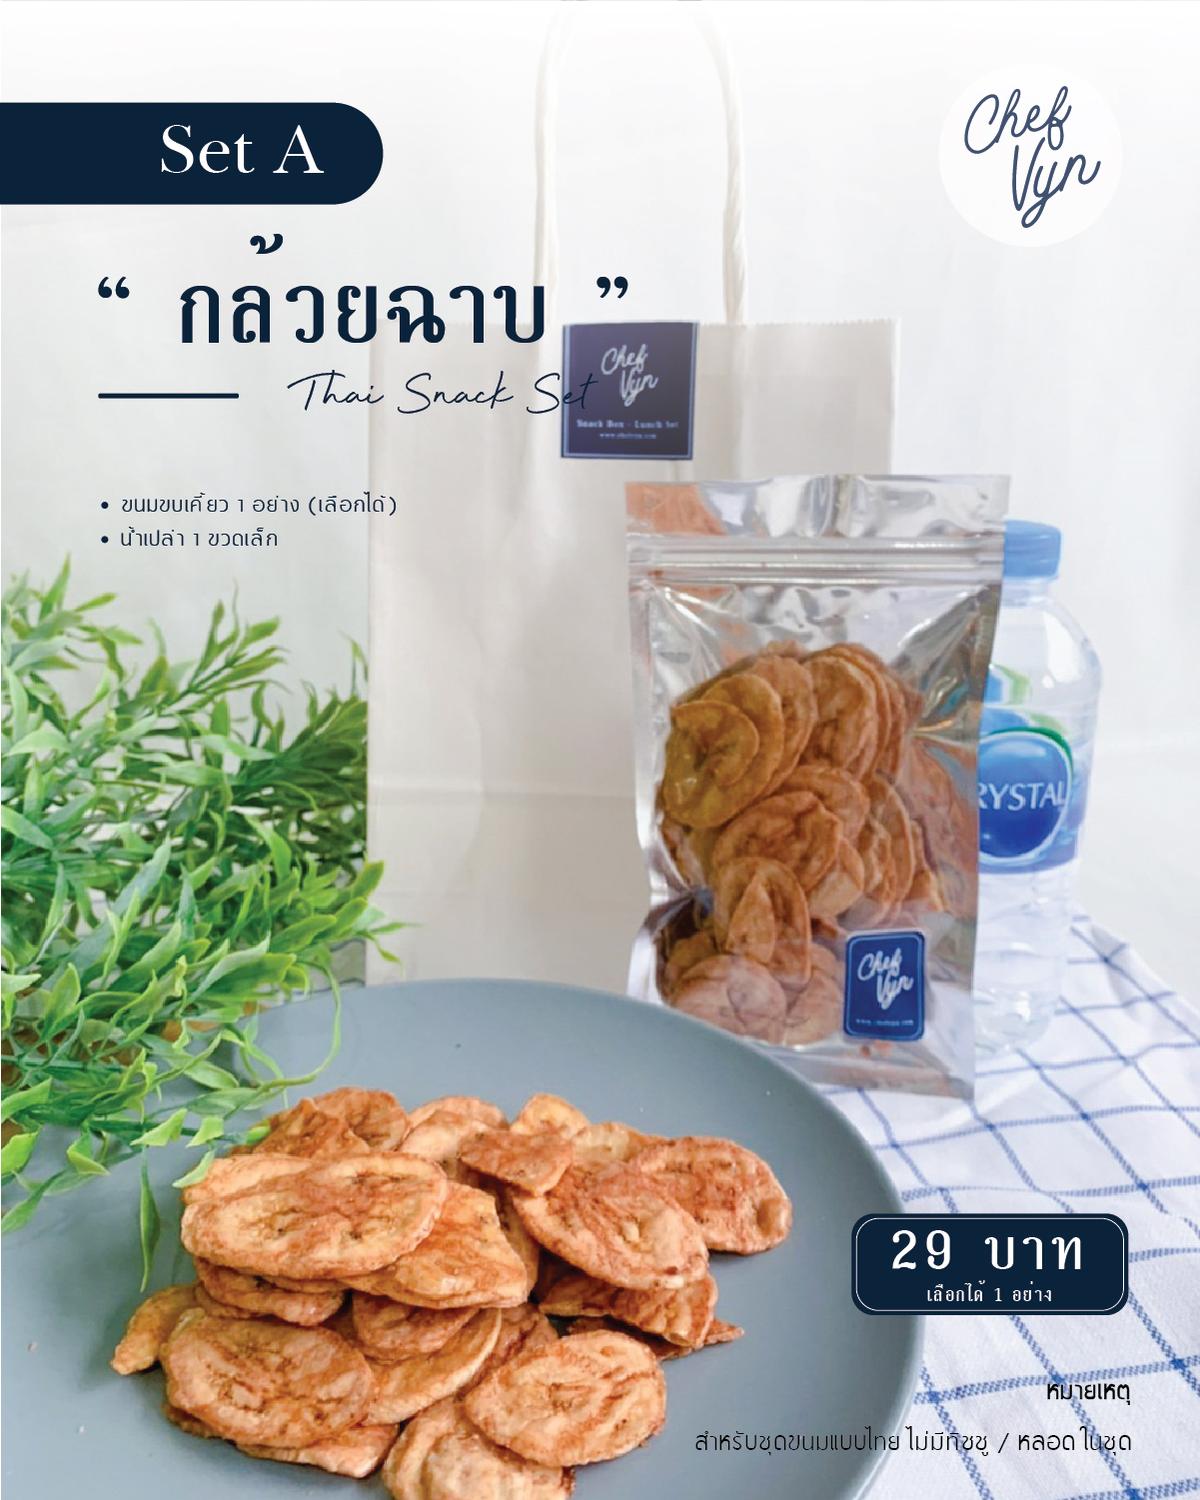 Thai Snack ขนม 1 อย่างพร้อมน้ำและถุง SetA 03